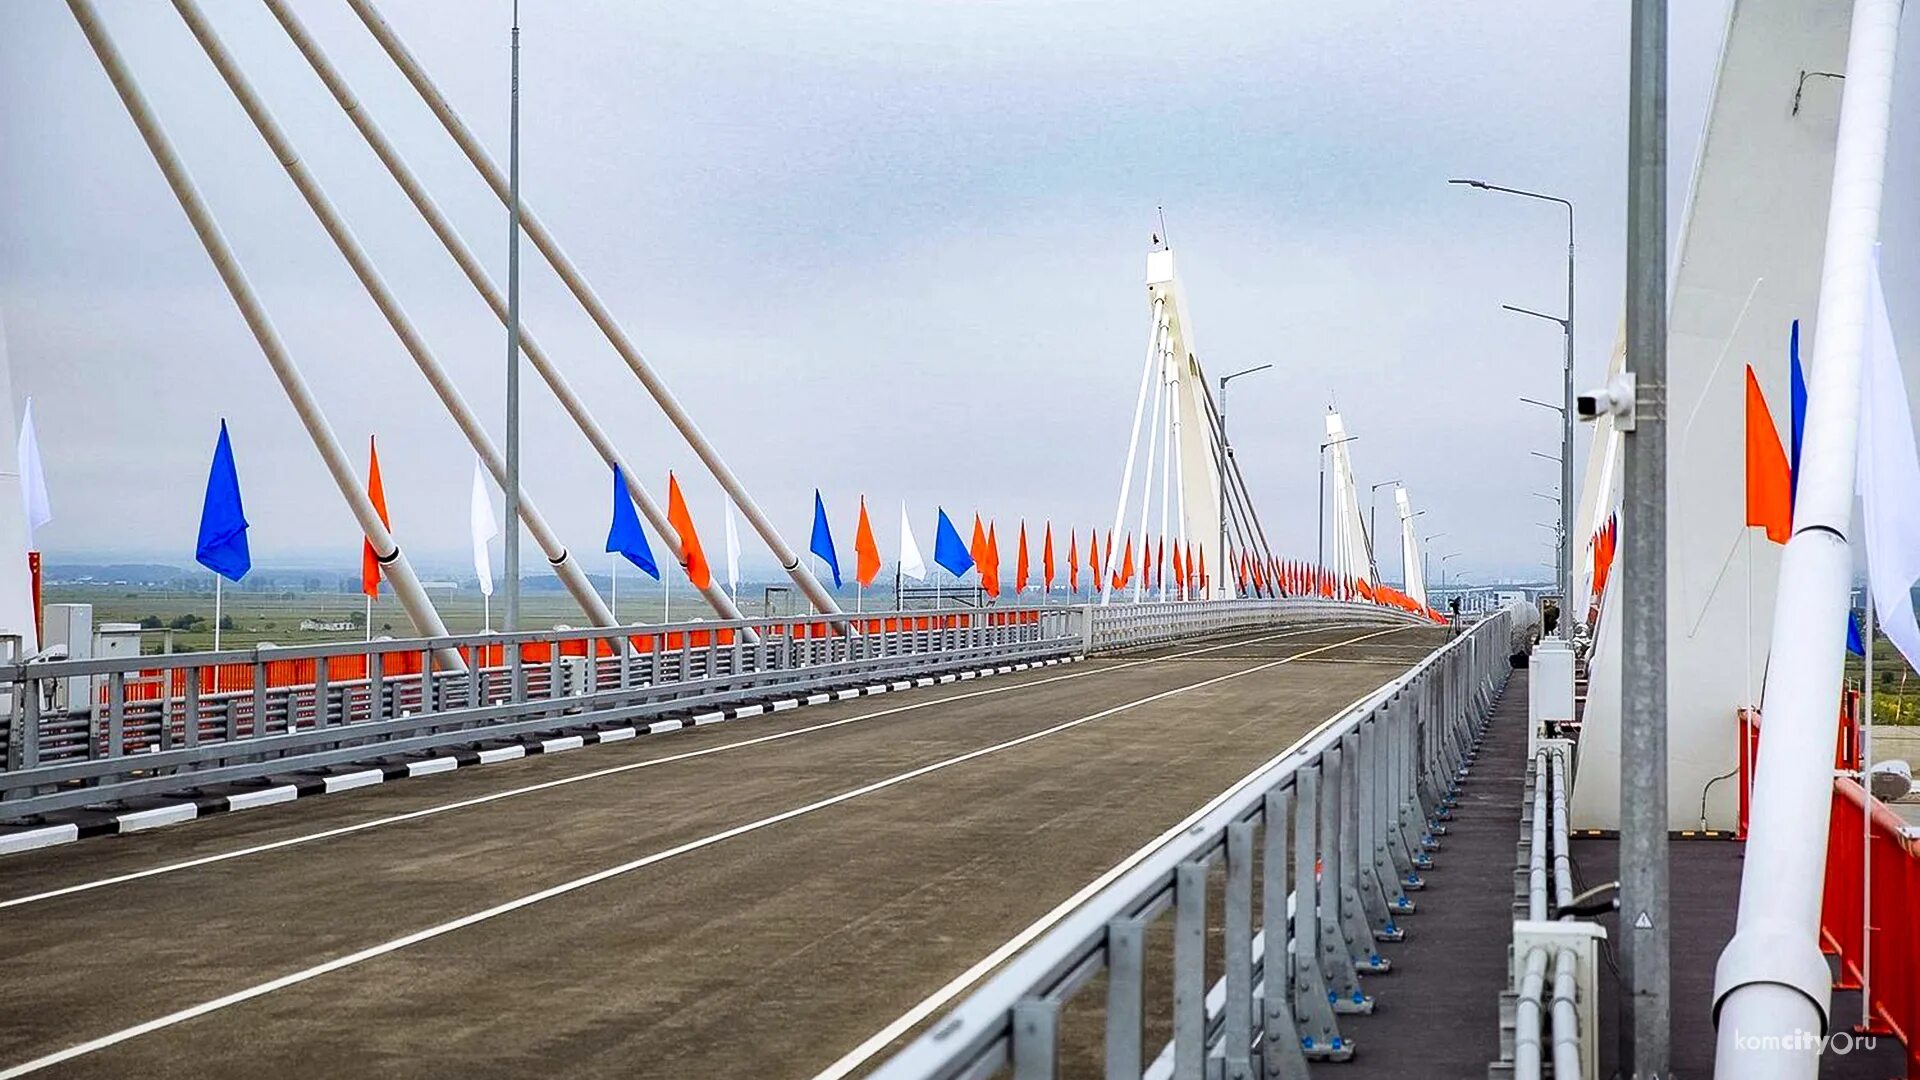 Новый мост открыт. Мост Благовещенск Хэйхэ. Автомобильный мост Благовещенск Хэйхэ. Благовещенск мост в Китай. Открытие моста Благовещенск Хэйхэ.